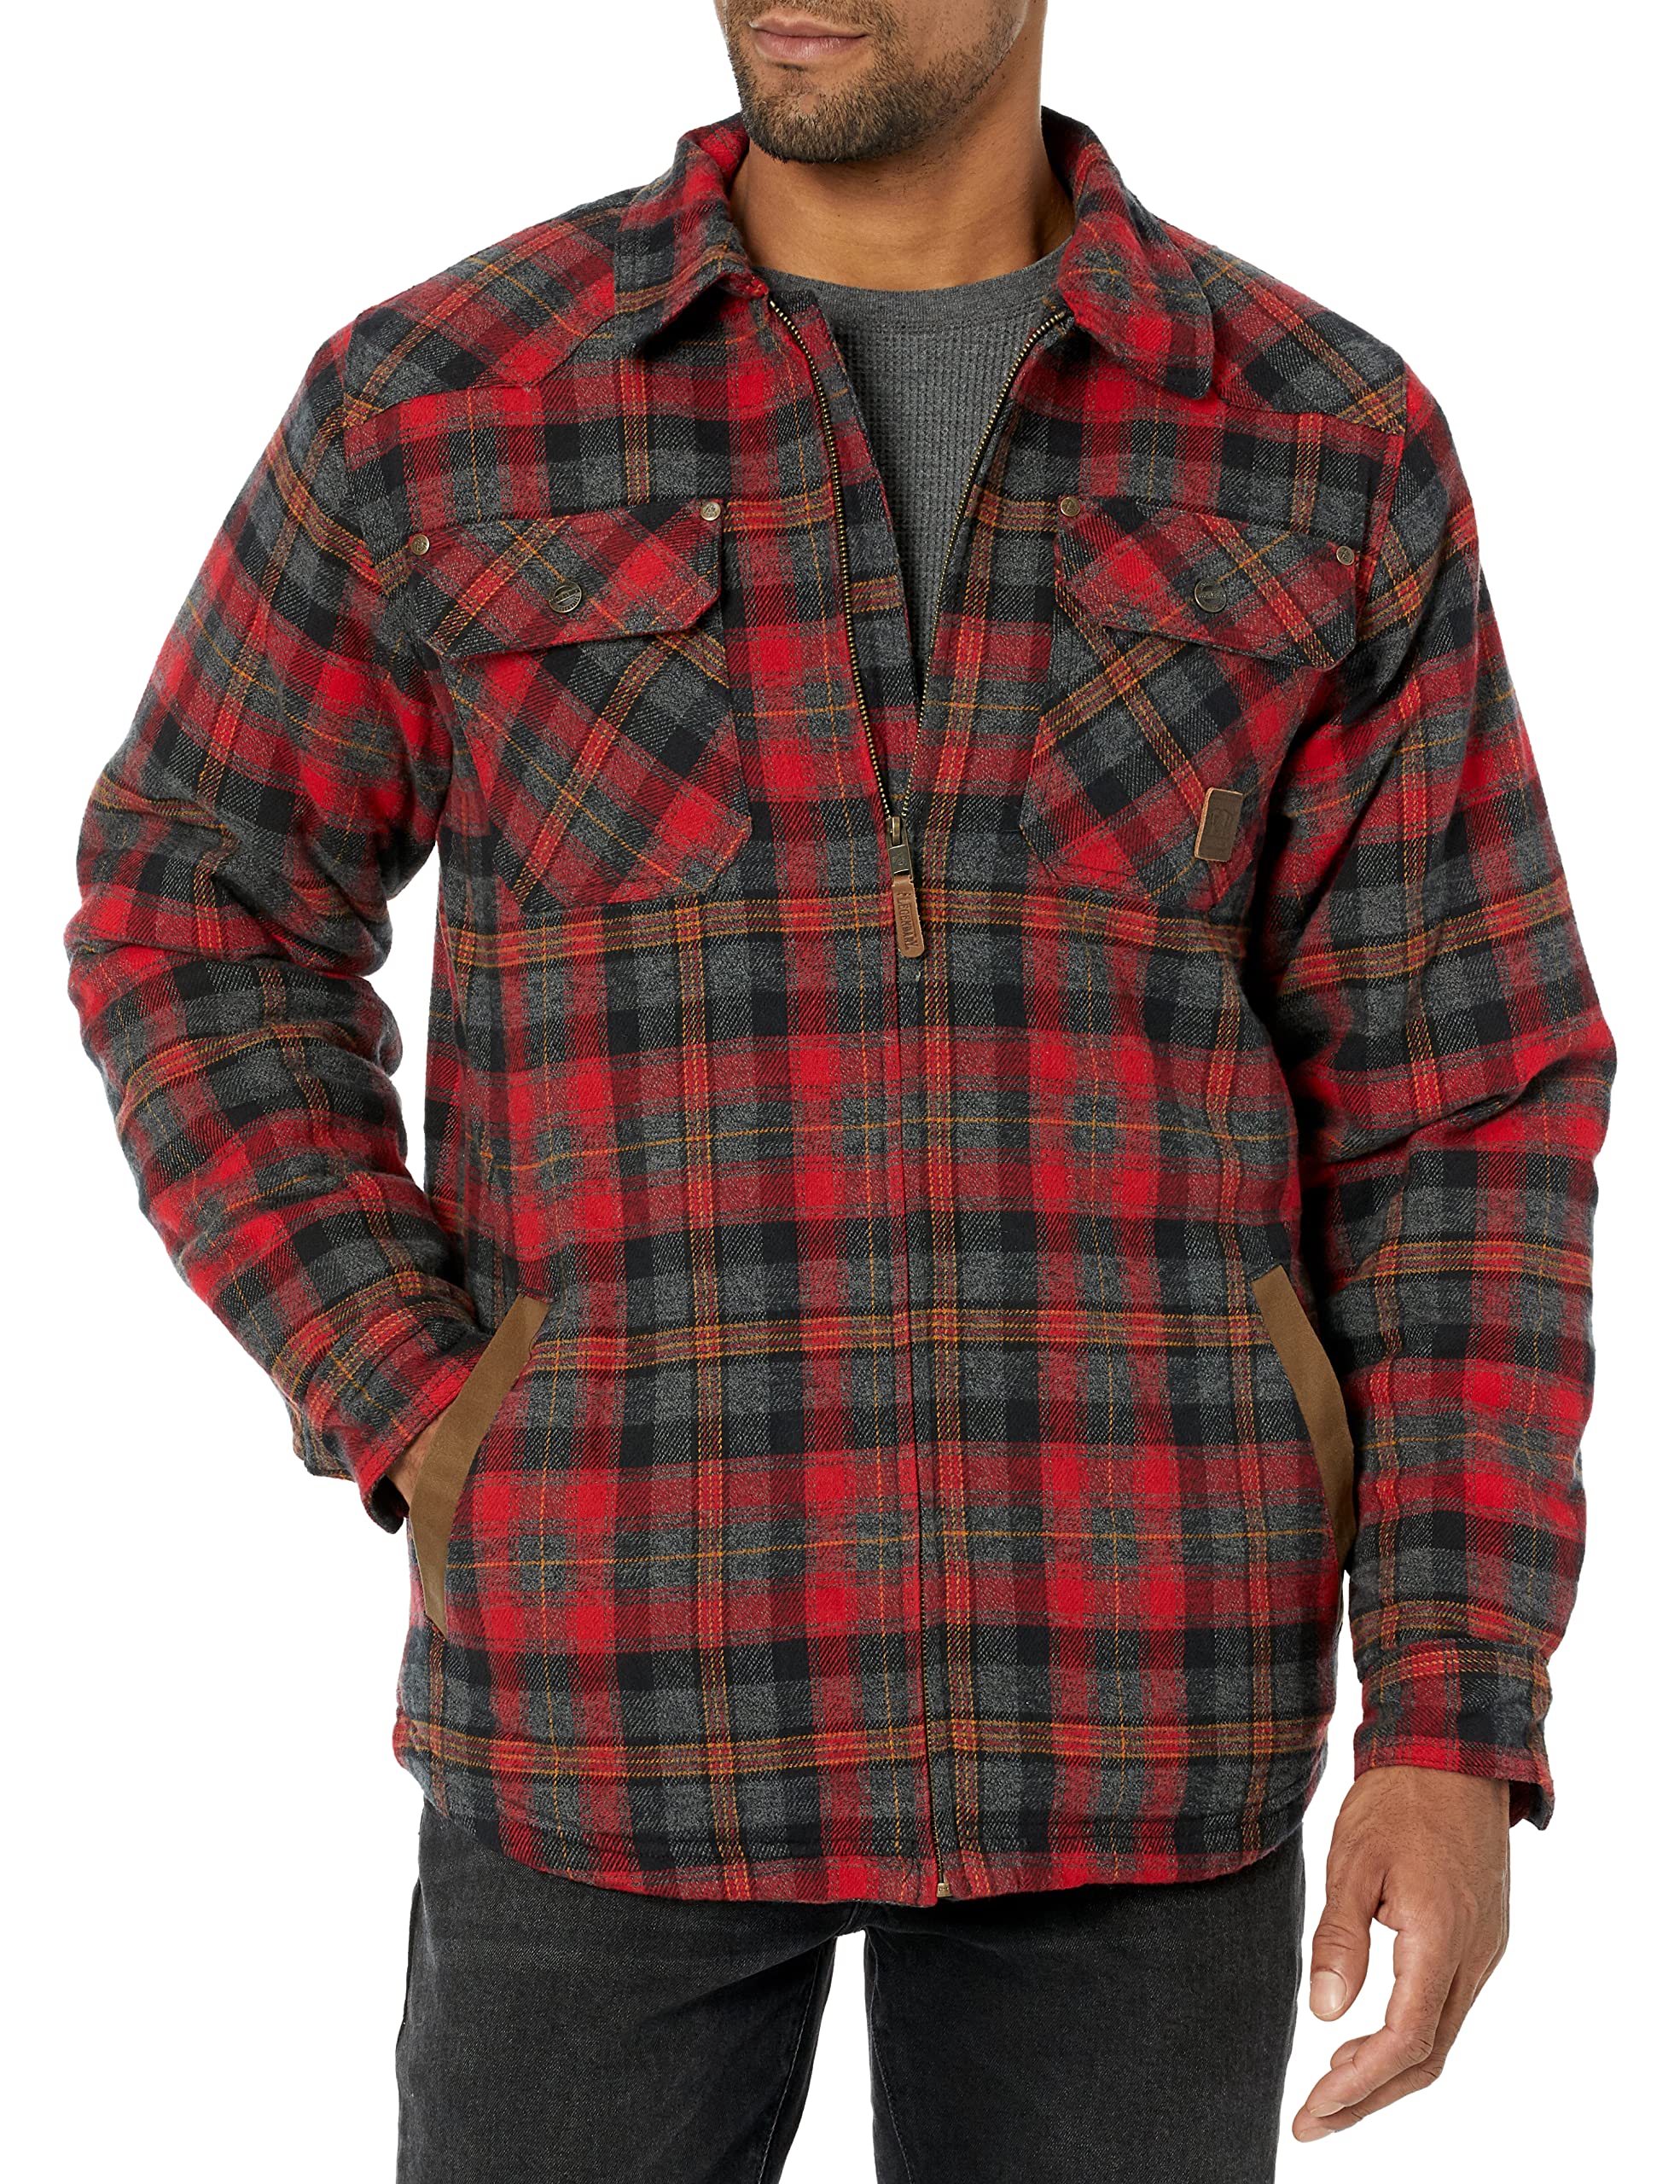 Legendary Whitetails Men's Tough as Buck Berber Lined Flannel Shirt Jacket